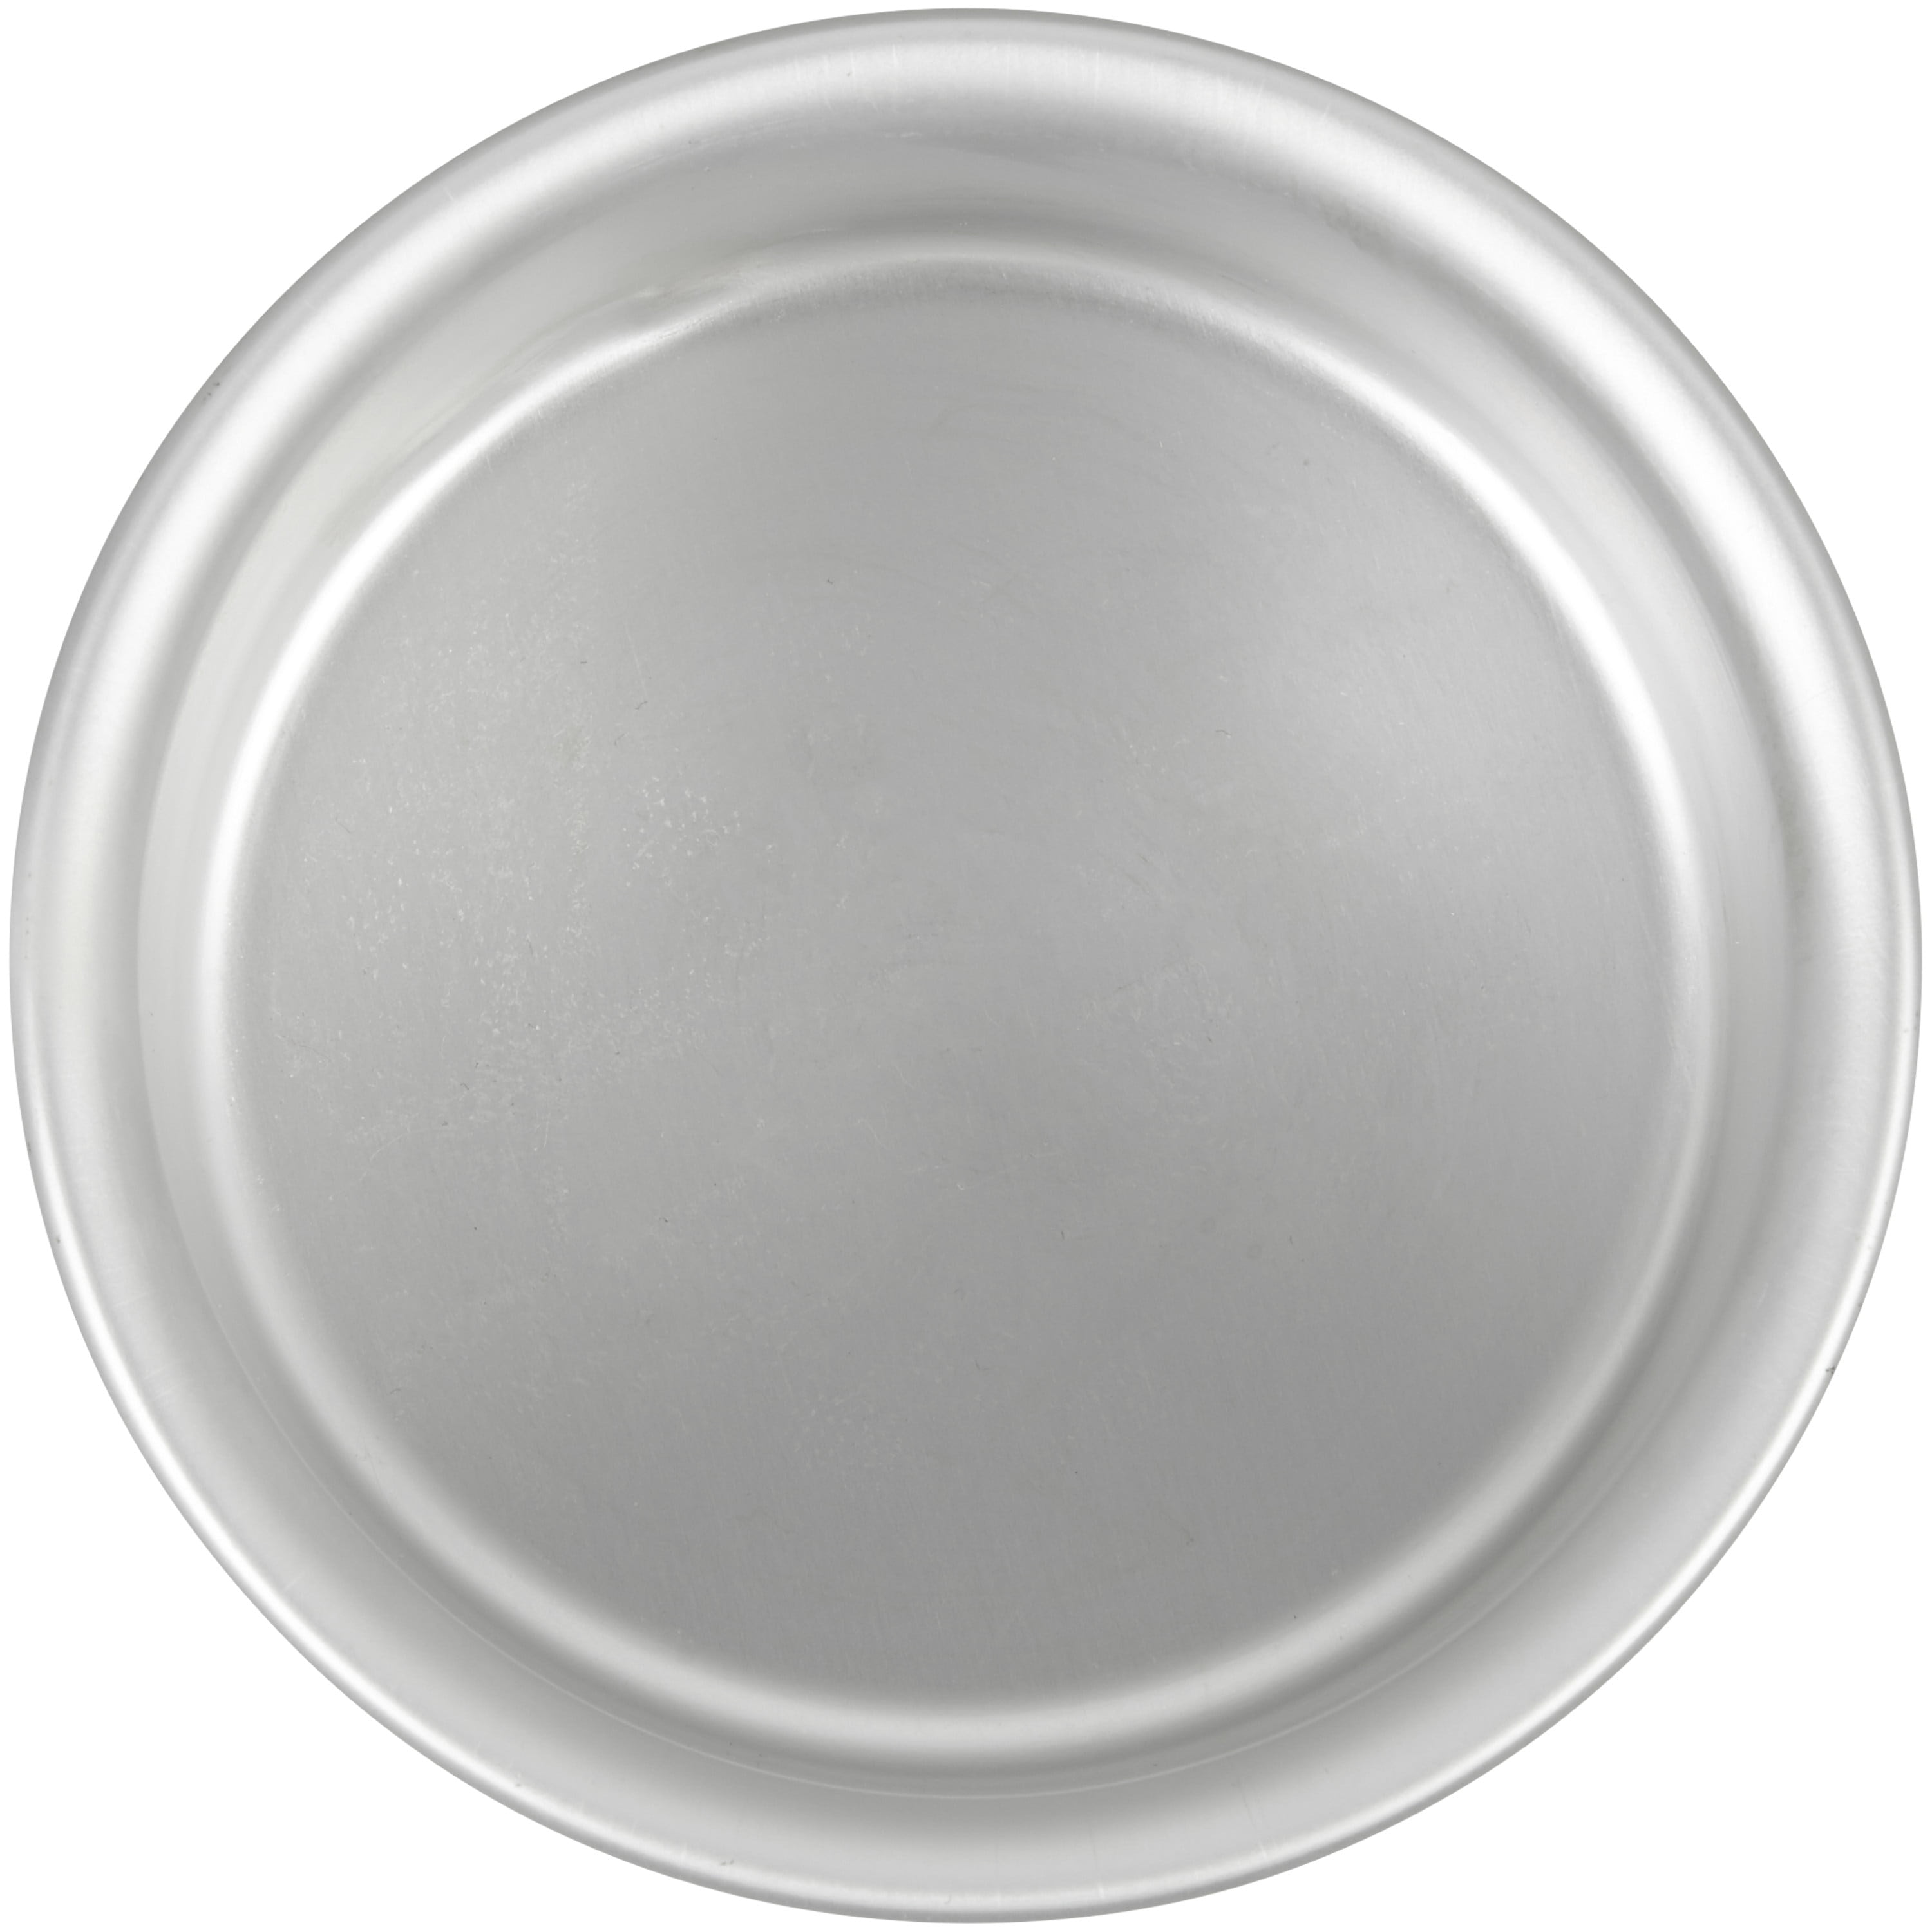 Nordic Ware Naturals Aluminum Eighth Sheet Pan,10.1 x 7 x 1.1, Silver 